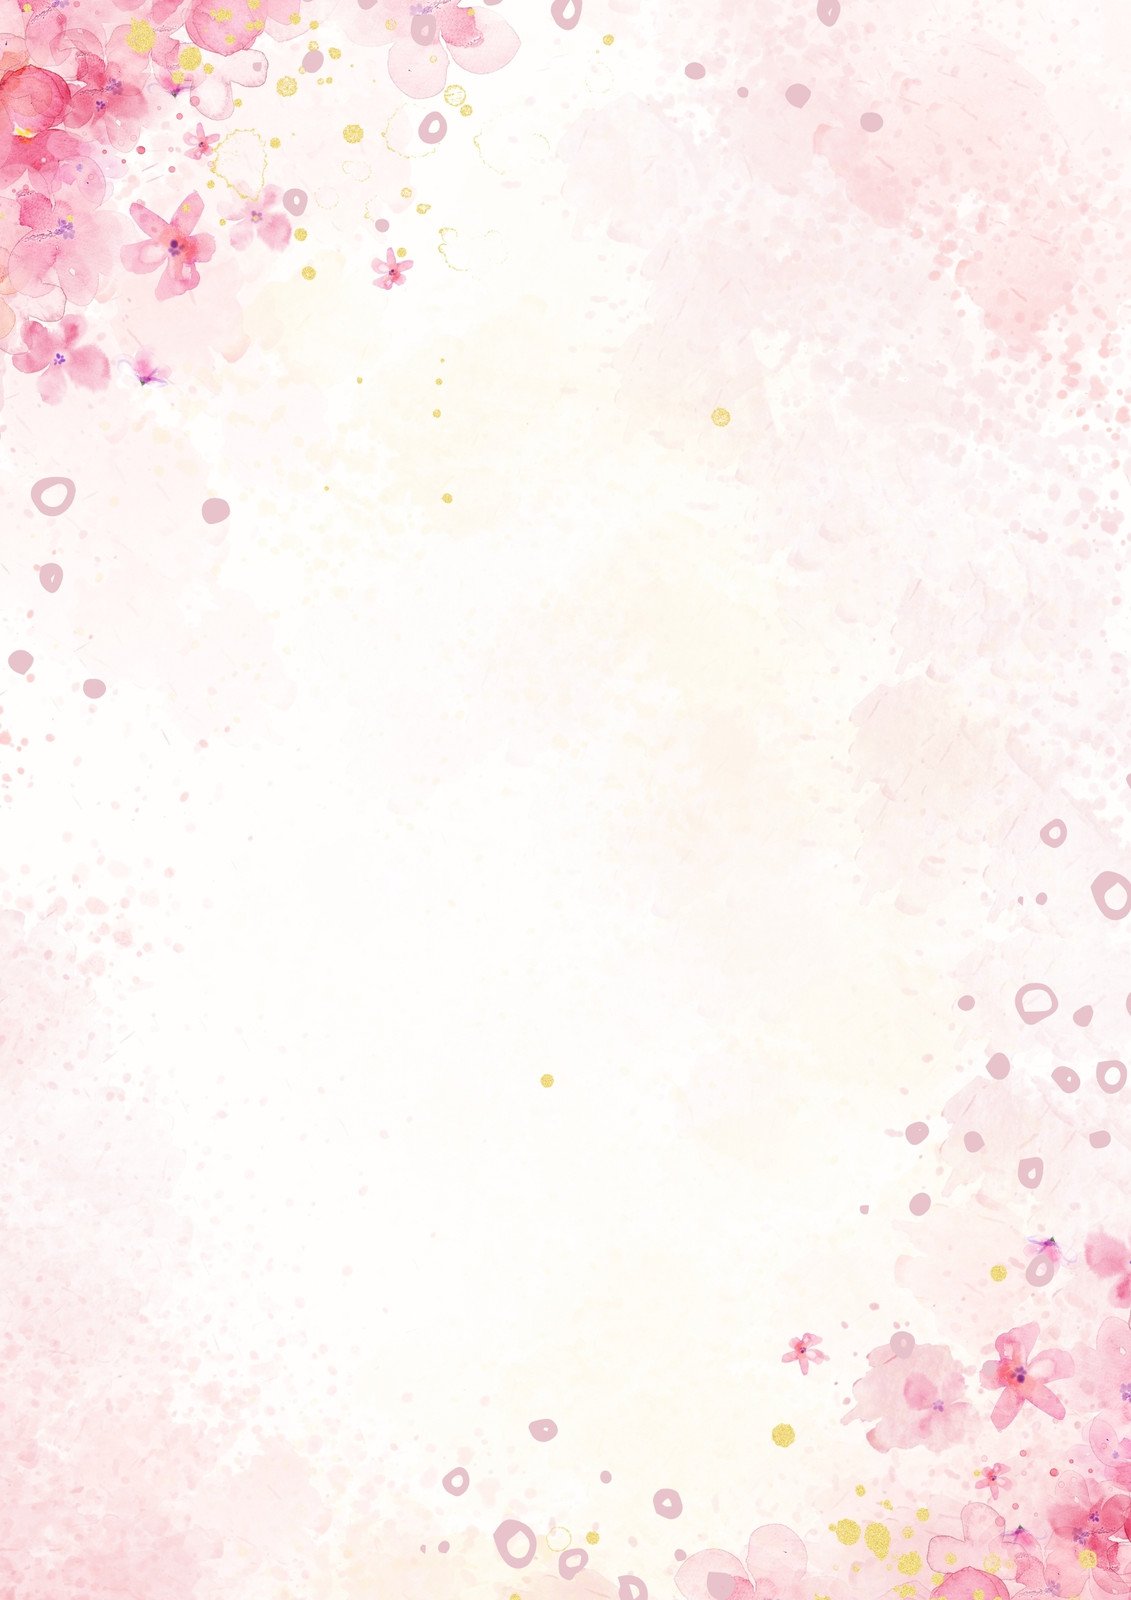 Colorful Spring Floral Light Effect Background Wallpaper Image For Free  Download - Pngtree